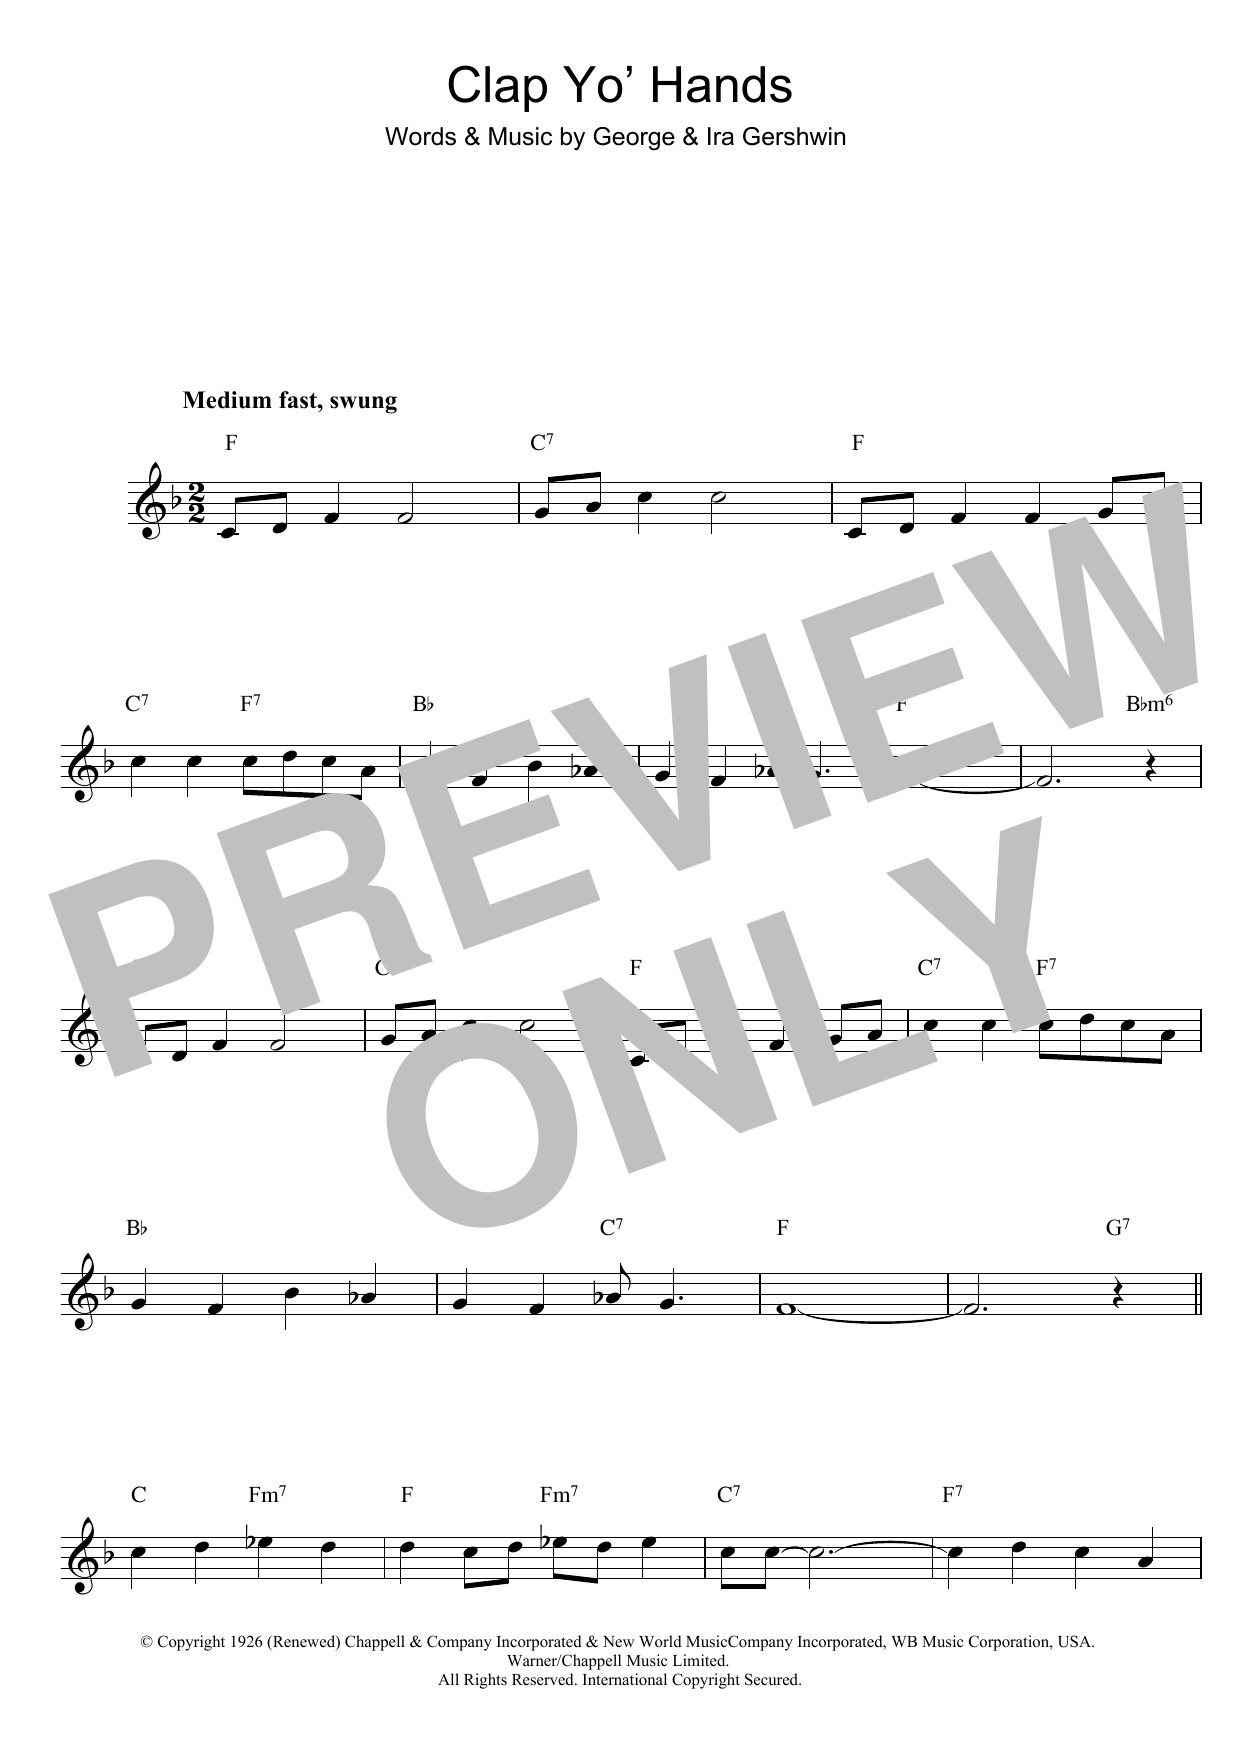 George Gershwin Clap Yo' Hands Sheet Music Notes & Chords for Lead Sheet / Fake Book - Download or Print PDF